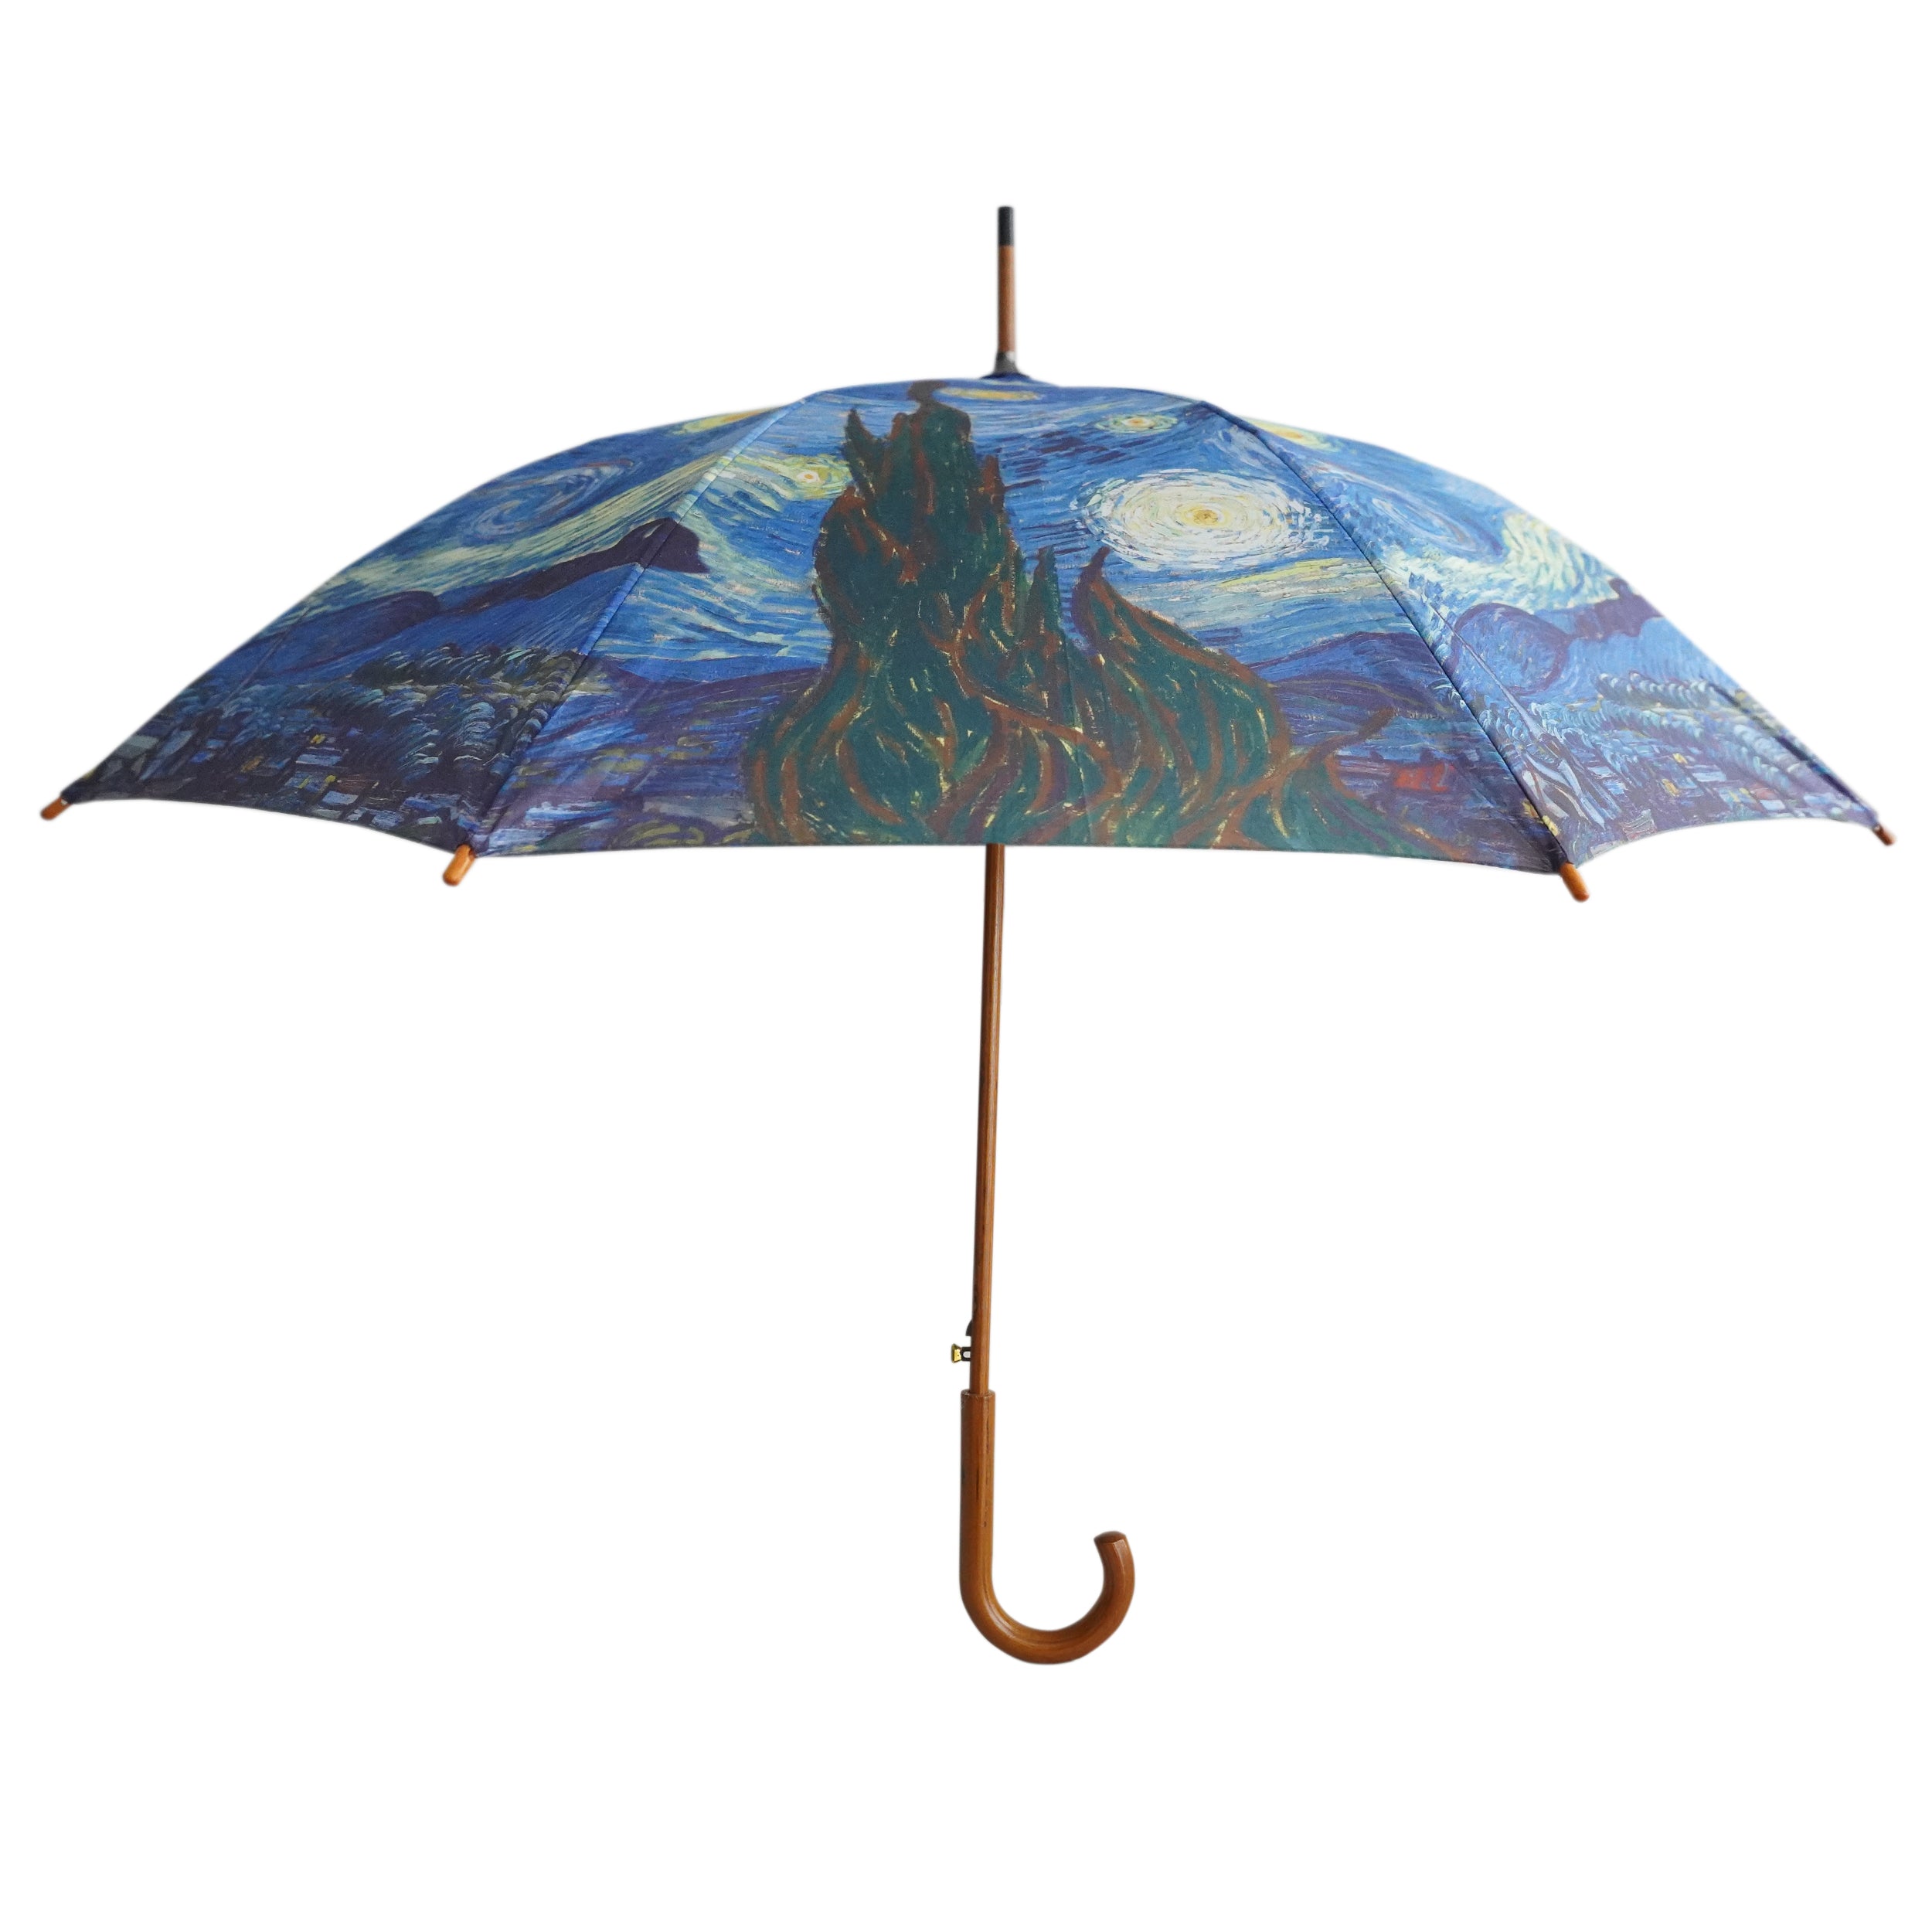 Vincent van Gogh's "Starry Night" Wooden Stick Umbrella